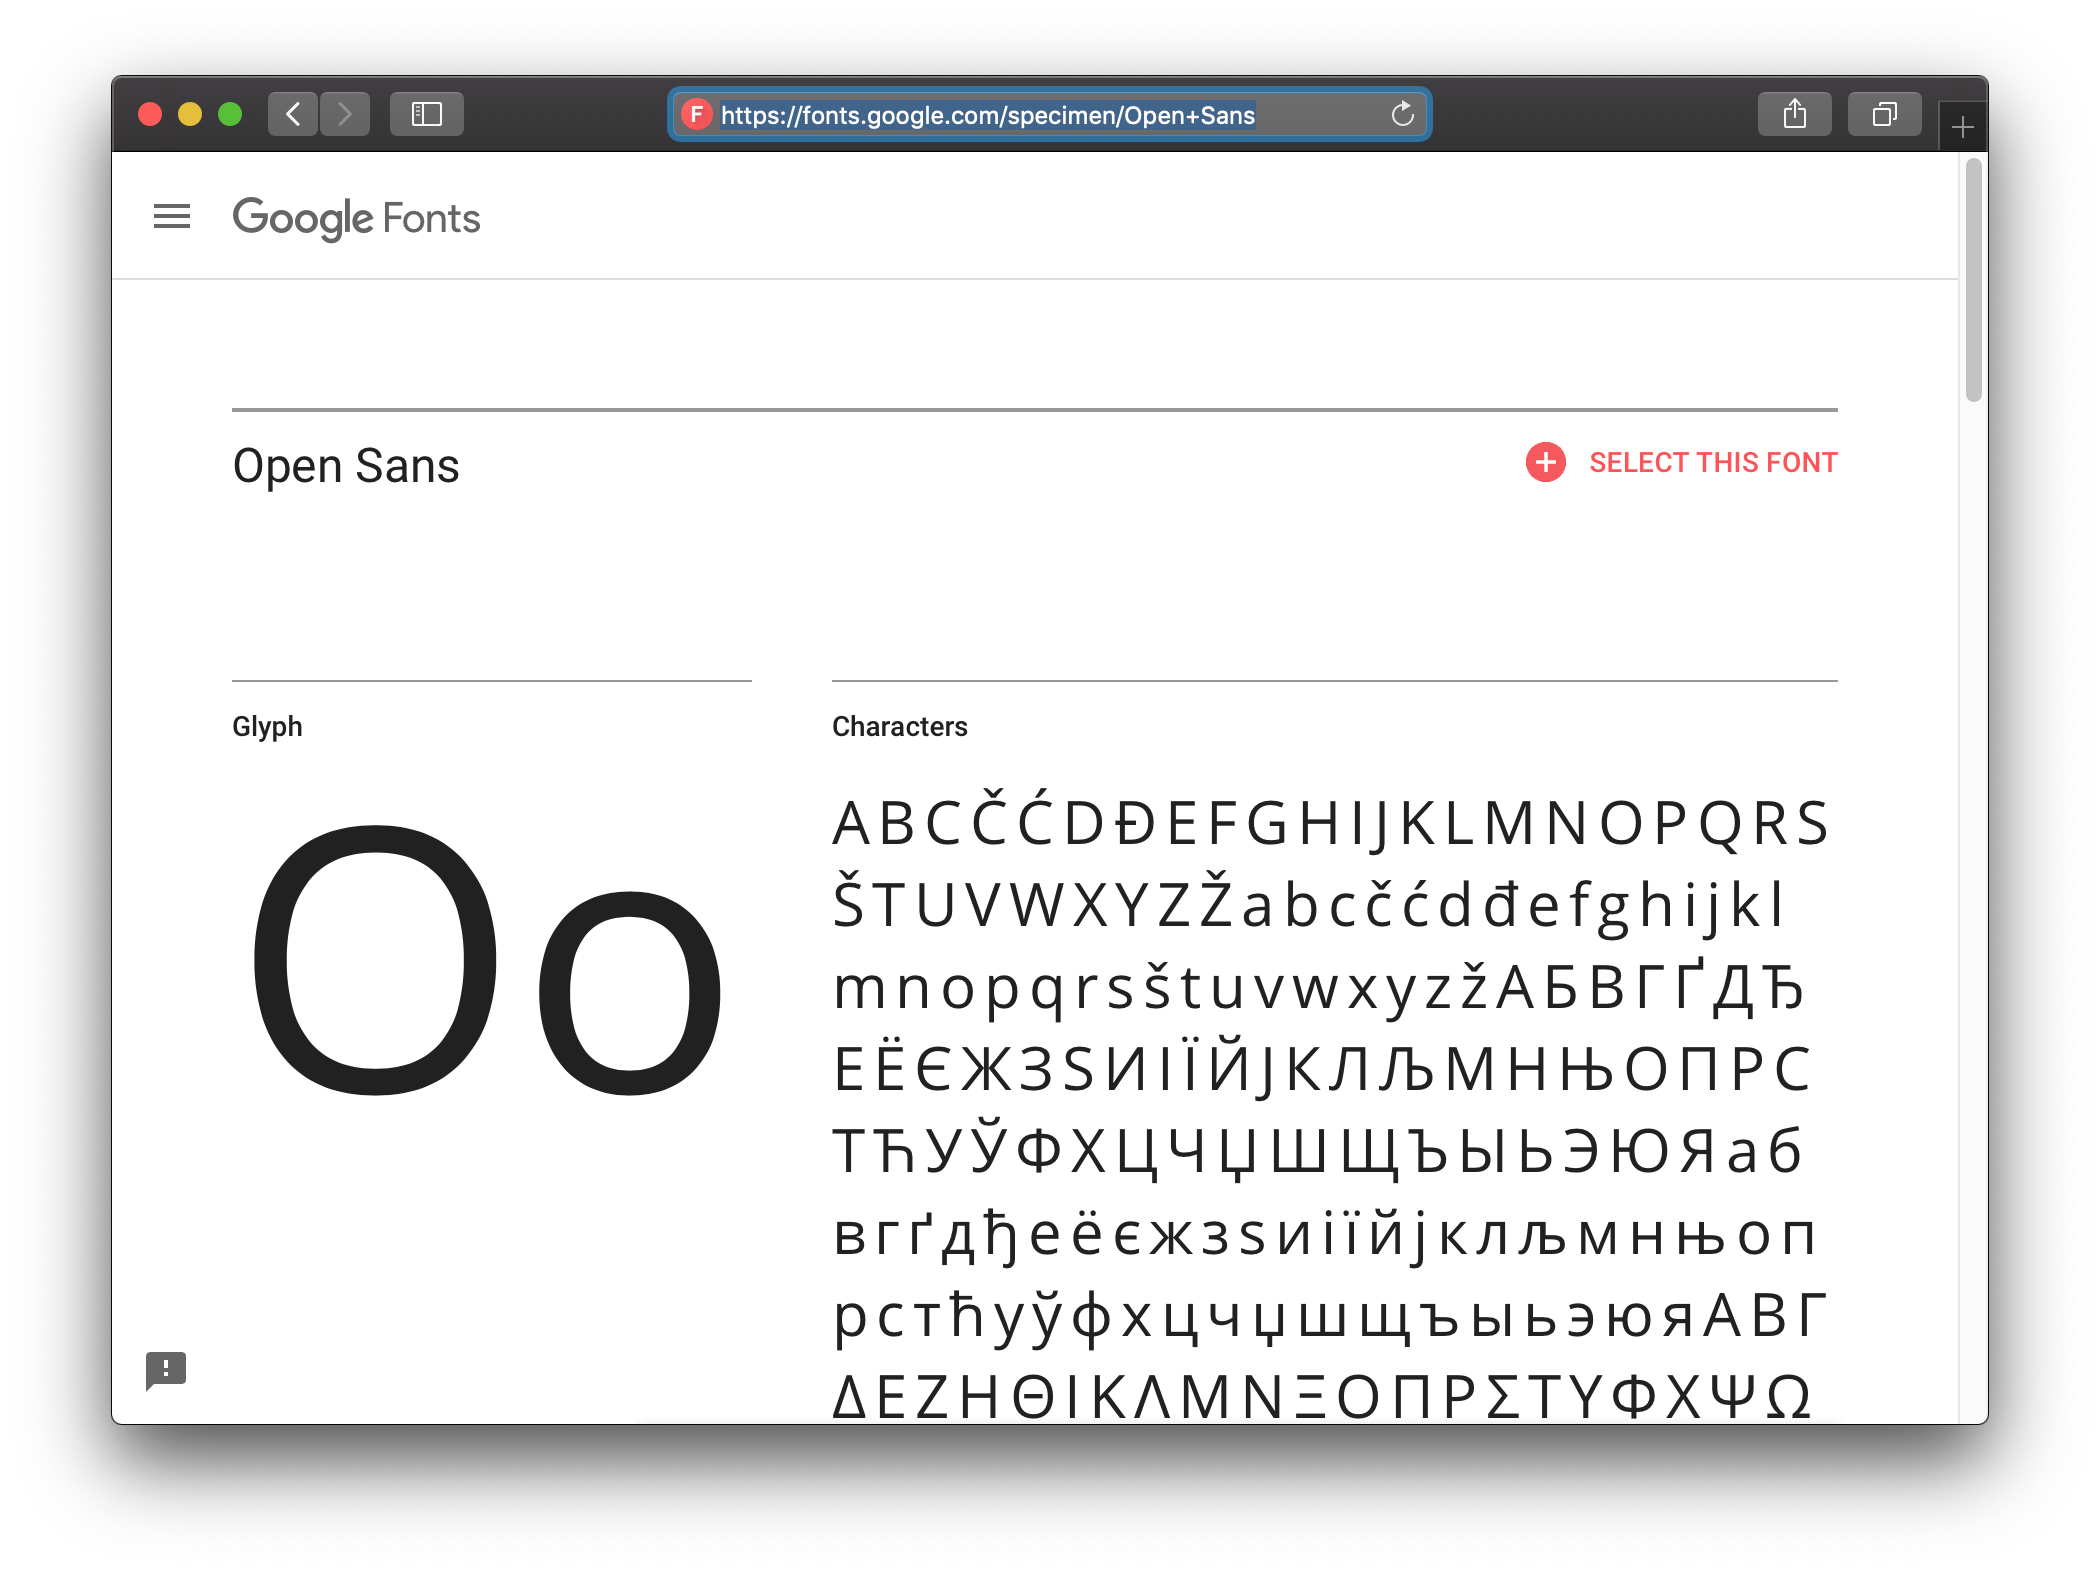 Google Fonts specimen page showing a preview of Open Sans.